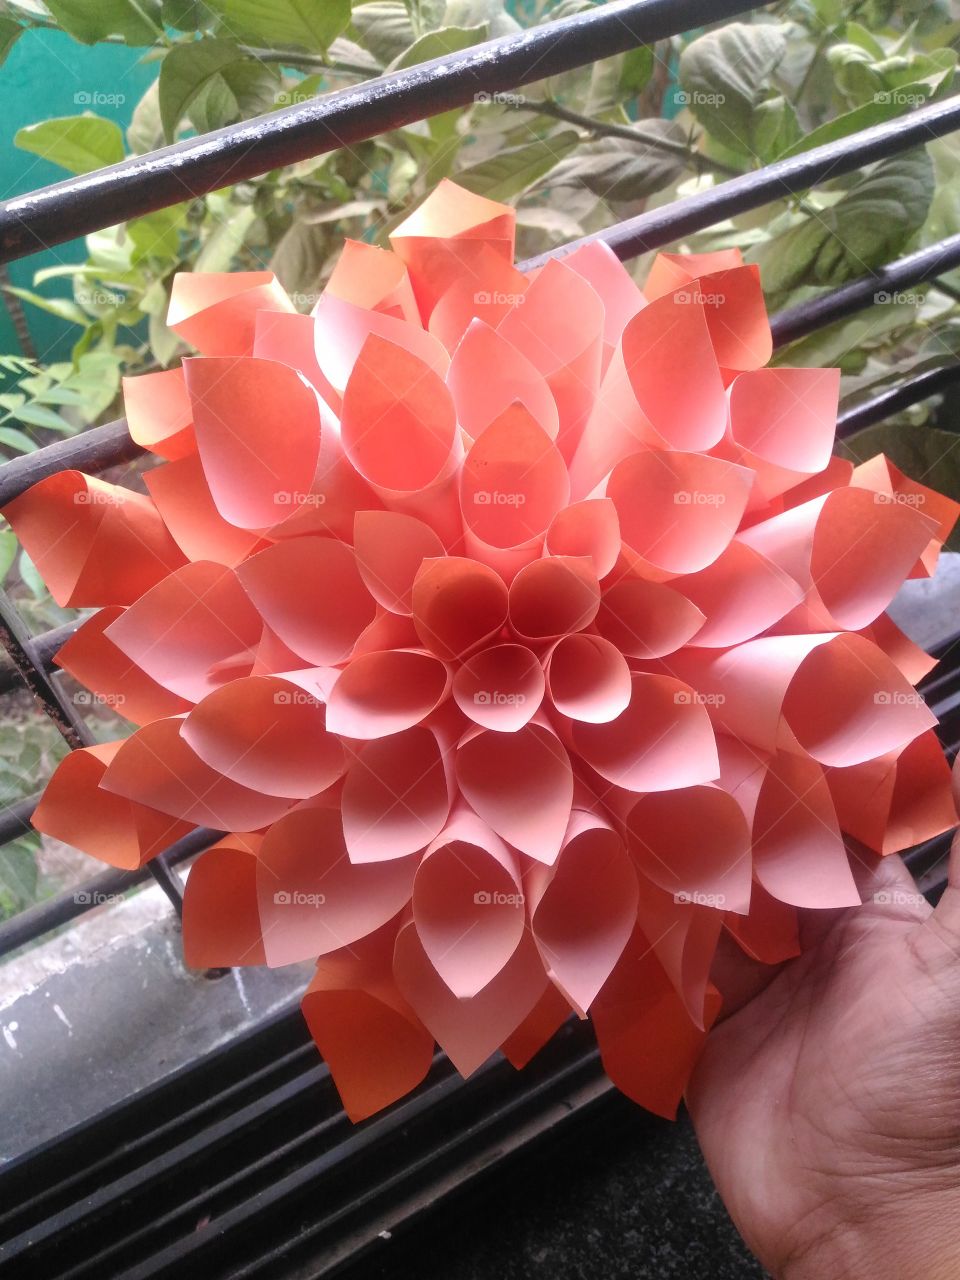 paper flower